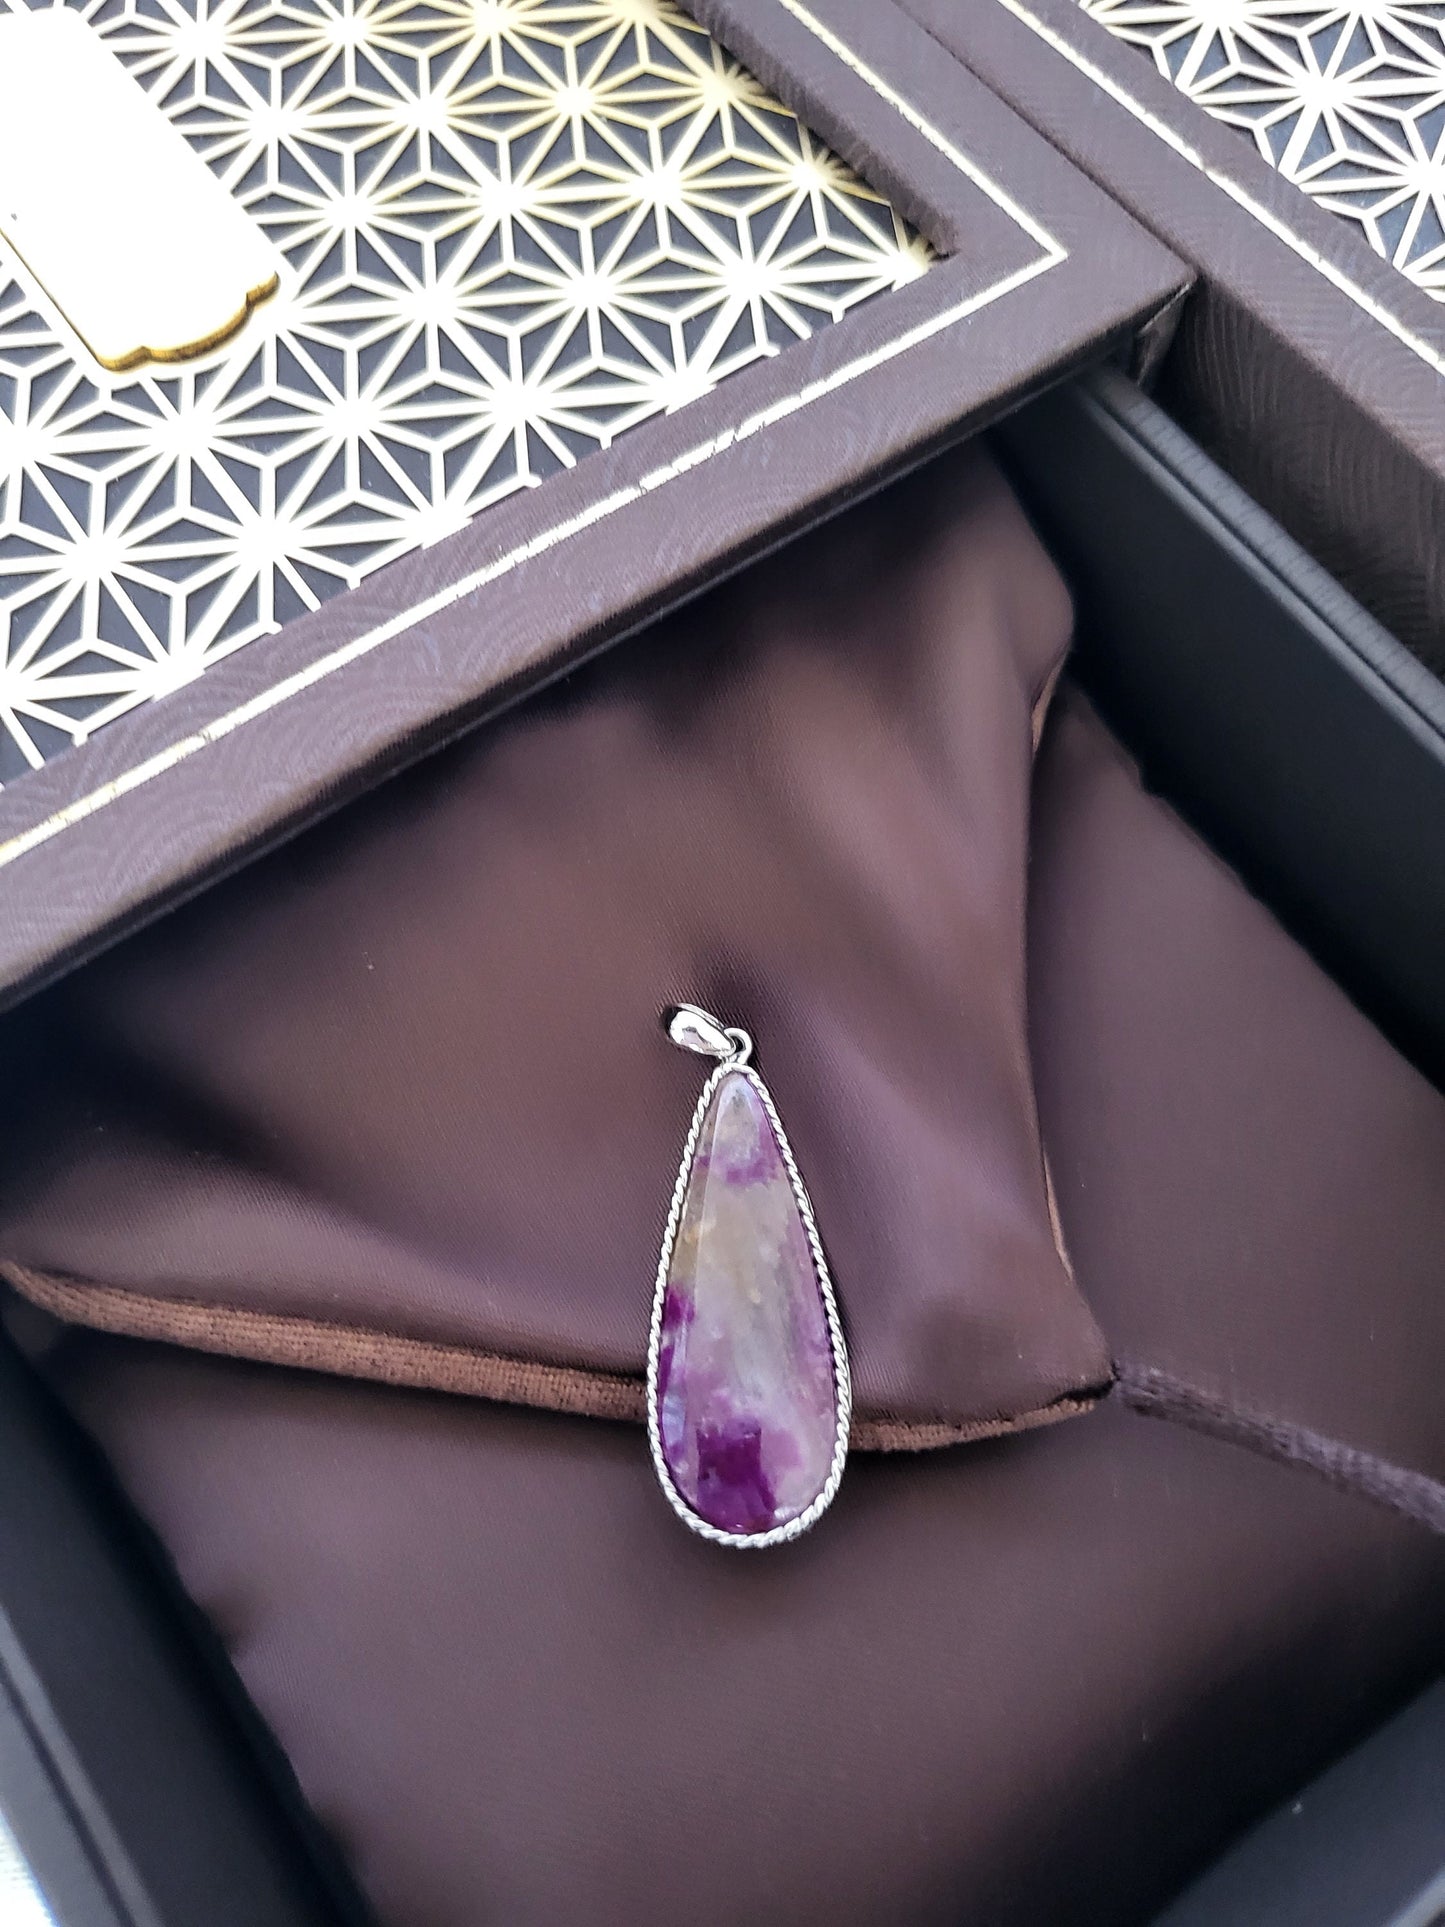 Natural Sugilite Reddish Purple Stone Crystal Dainty Silver Teardrop Pendant Necklace